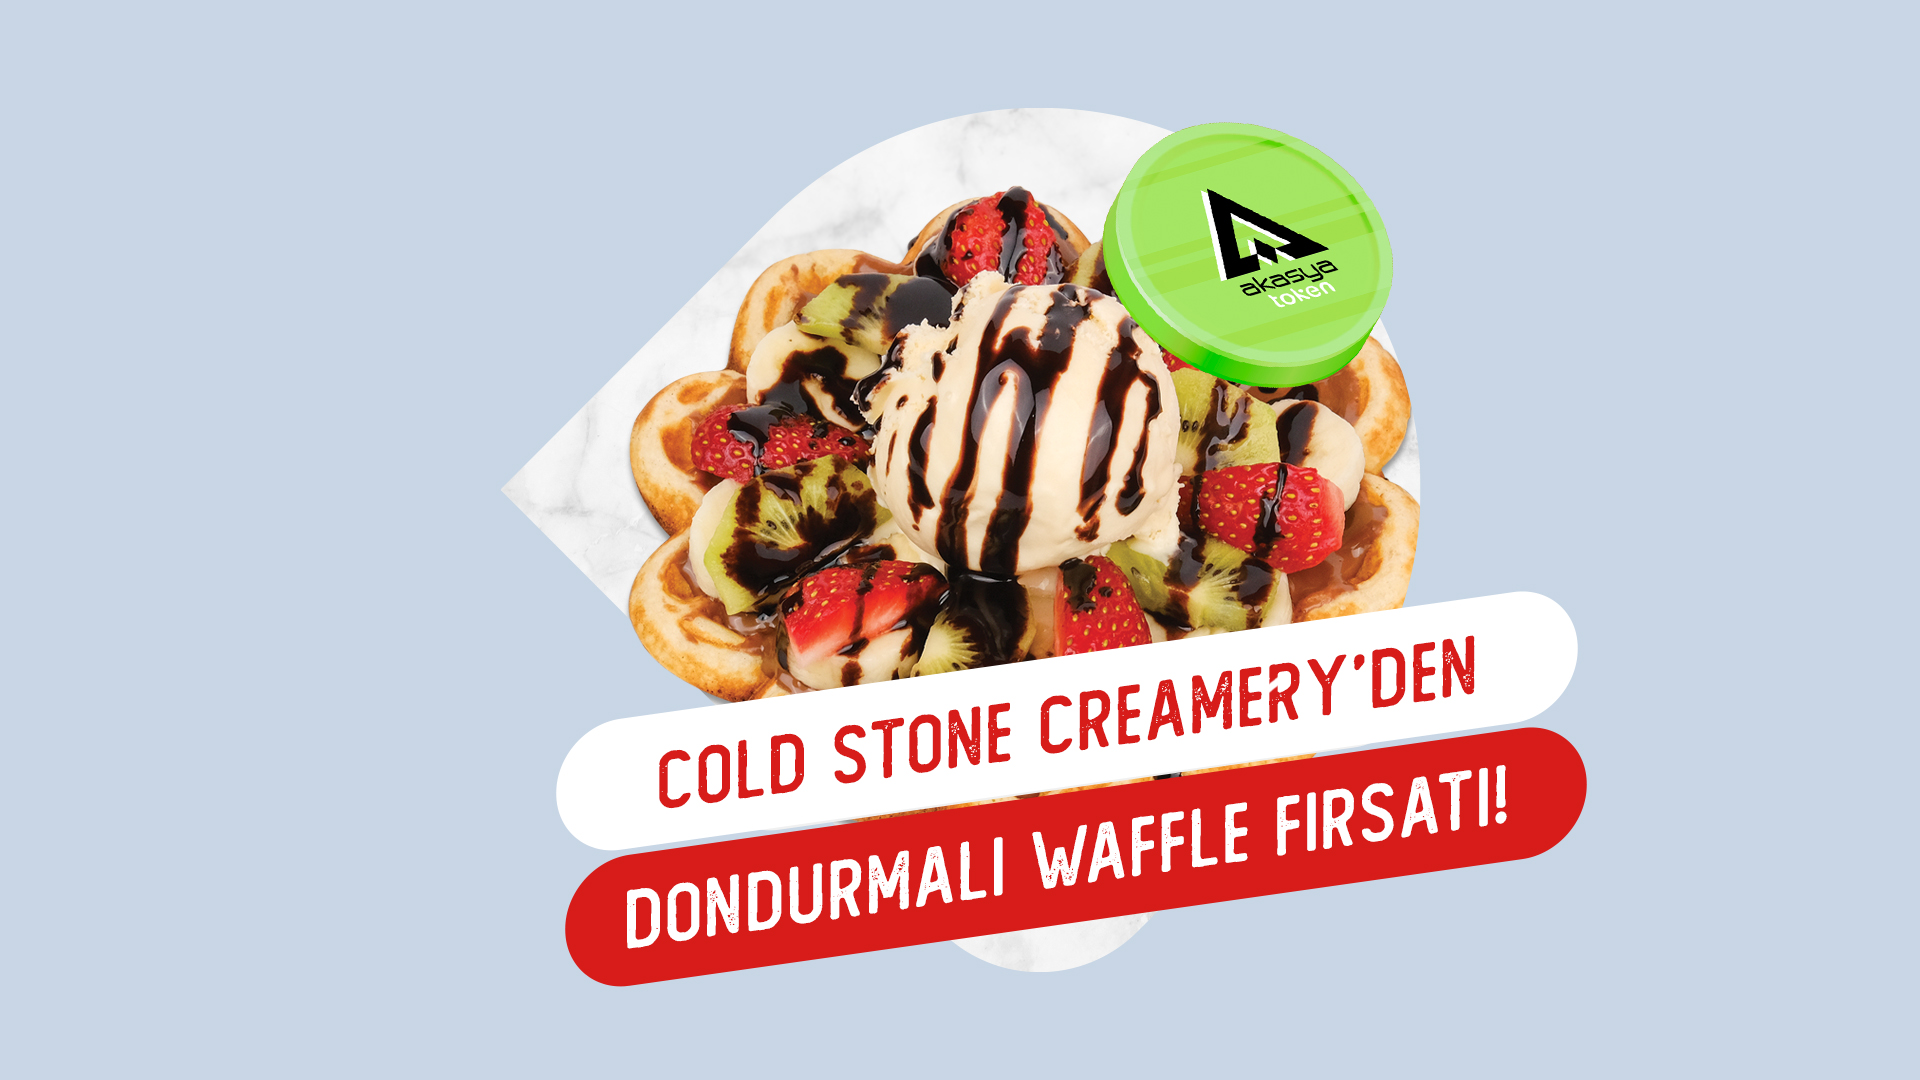 AKSY Token'a Özel Cold Stone Creamery’den Dondurmalı Waffle fırsatı! 